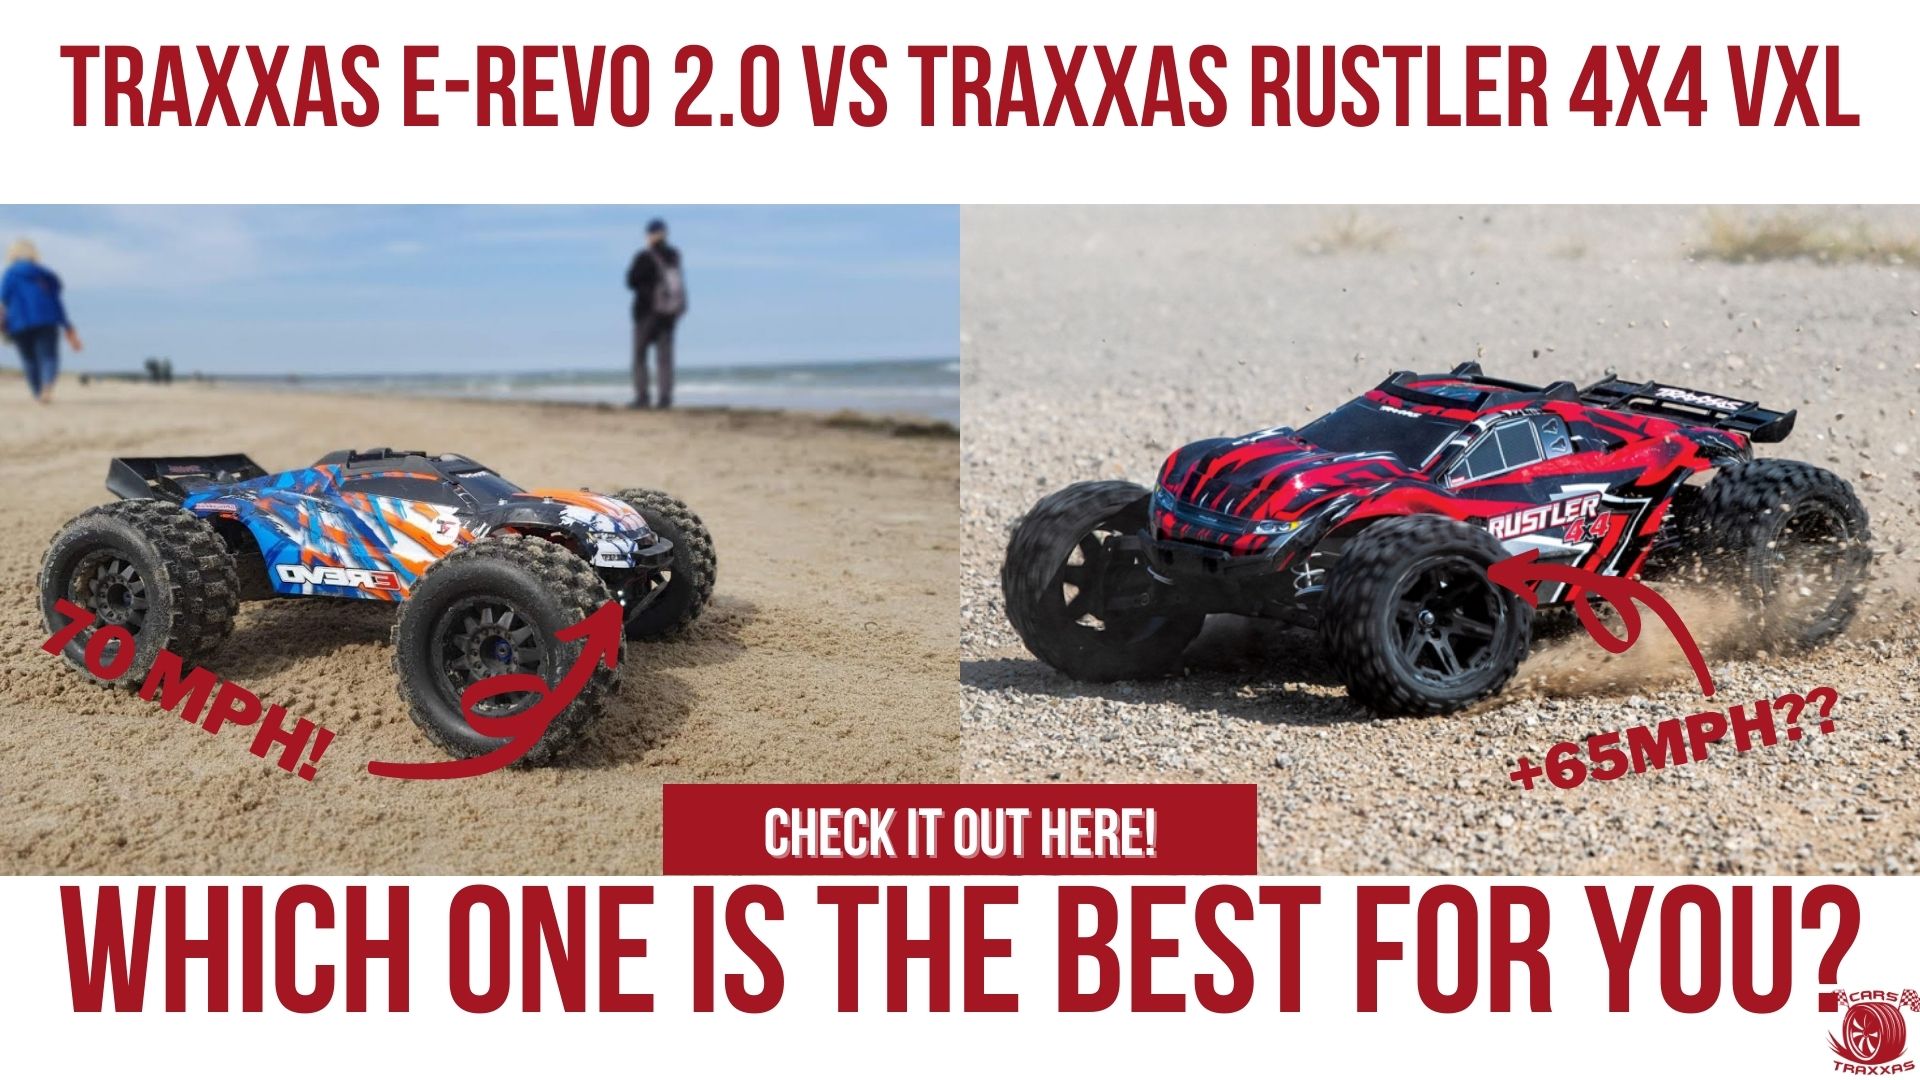 Details about   For Traxxas Slash 4X4 VXL Rustler E-Revo T-Maxx Metal Gear Kits 54T/15T 19T 17T